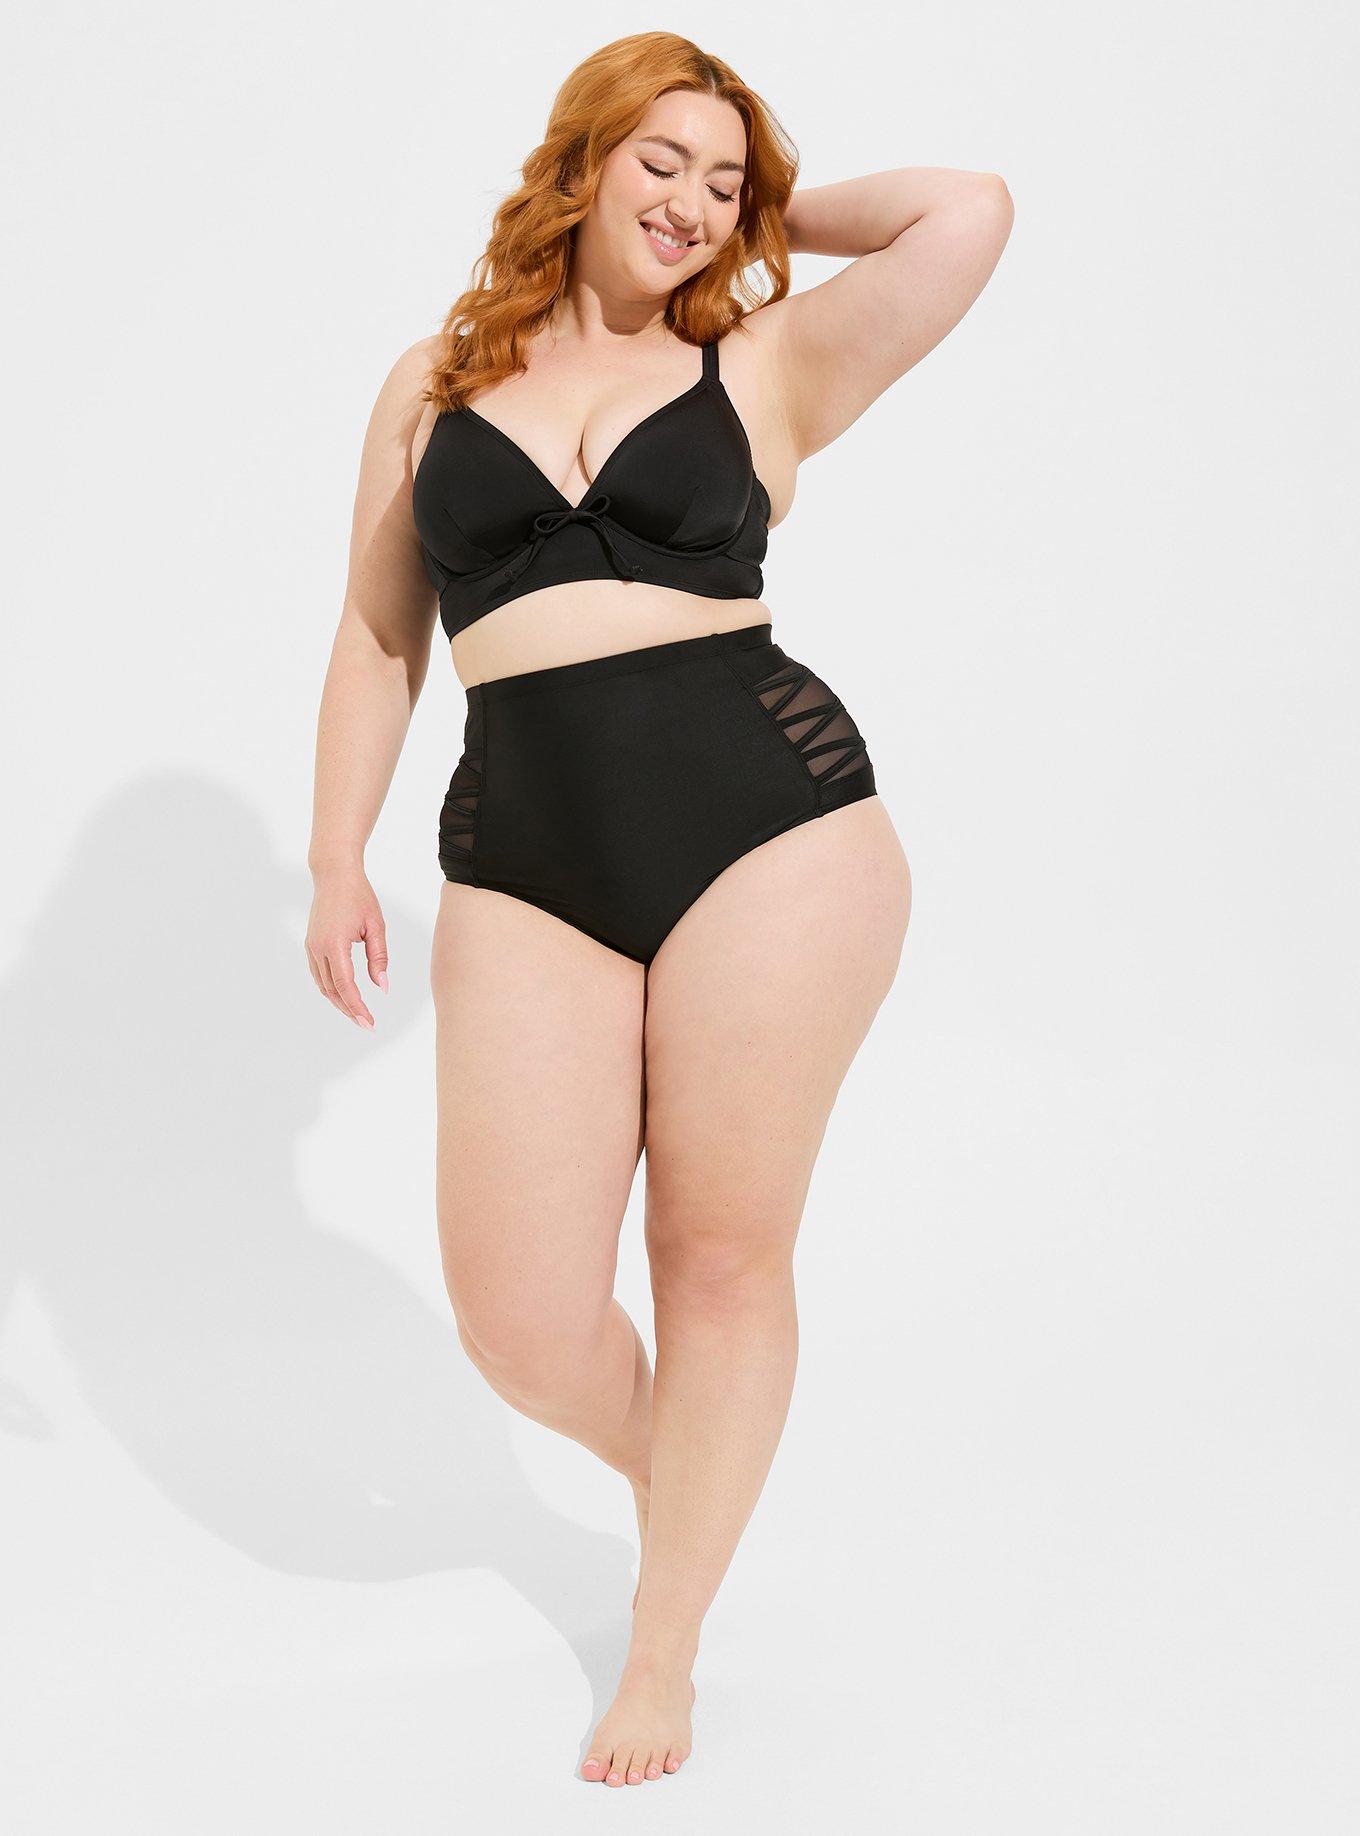 Torrid - Our swimwear fits like shapewear so it's designed to flaunt those  curves.